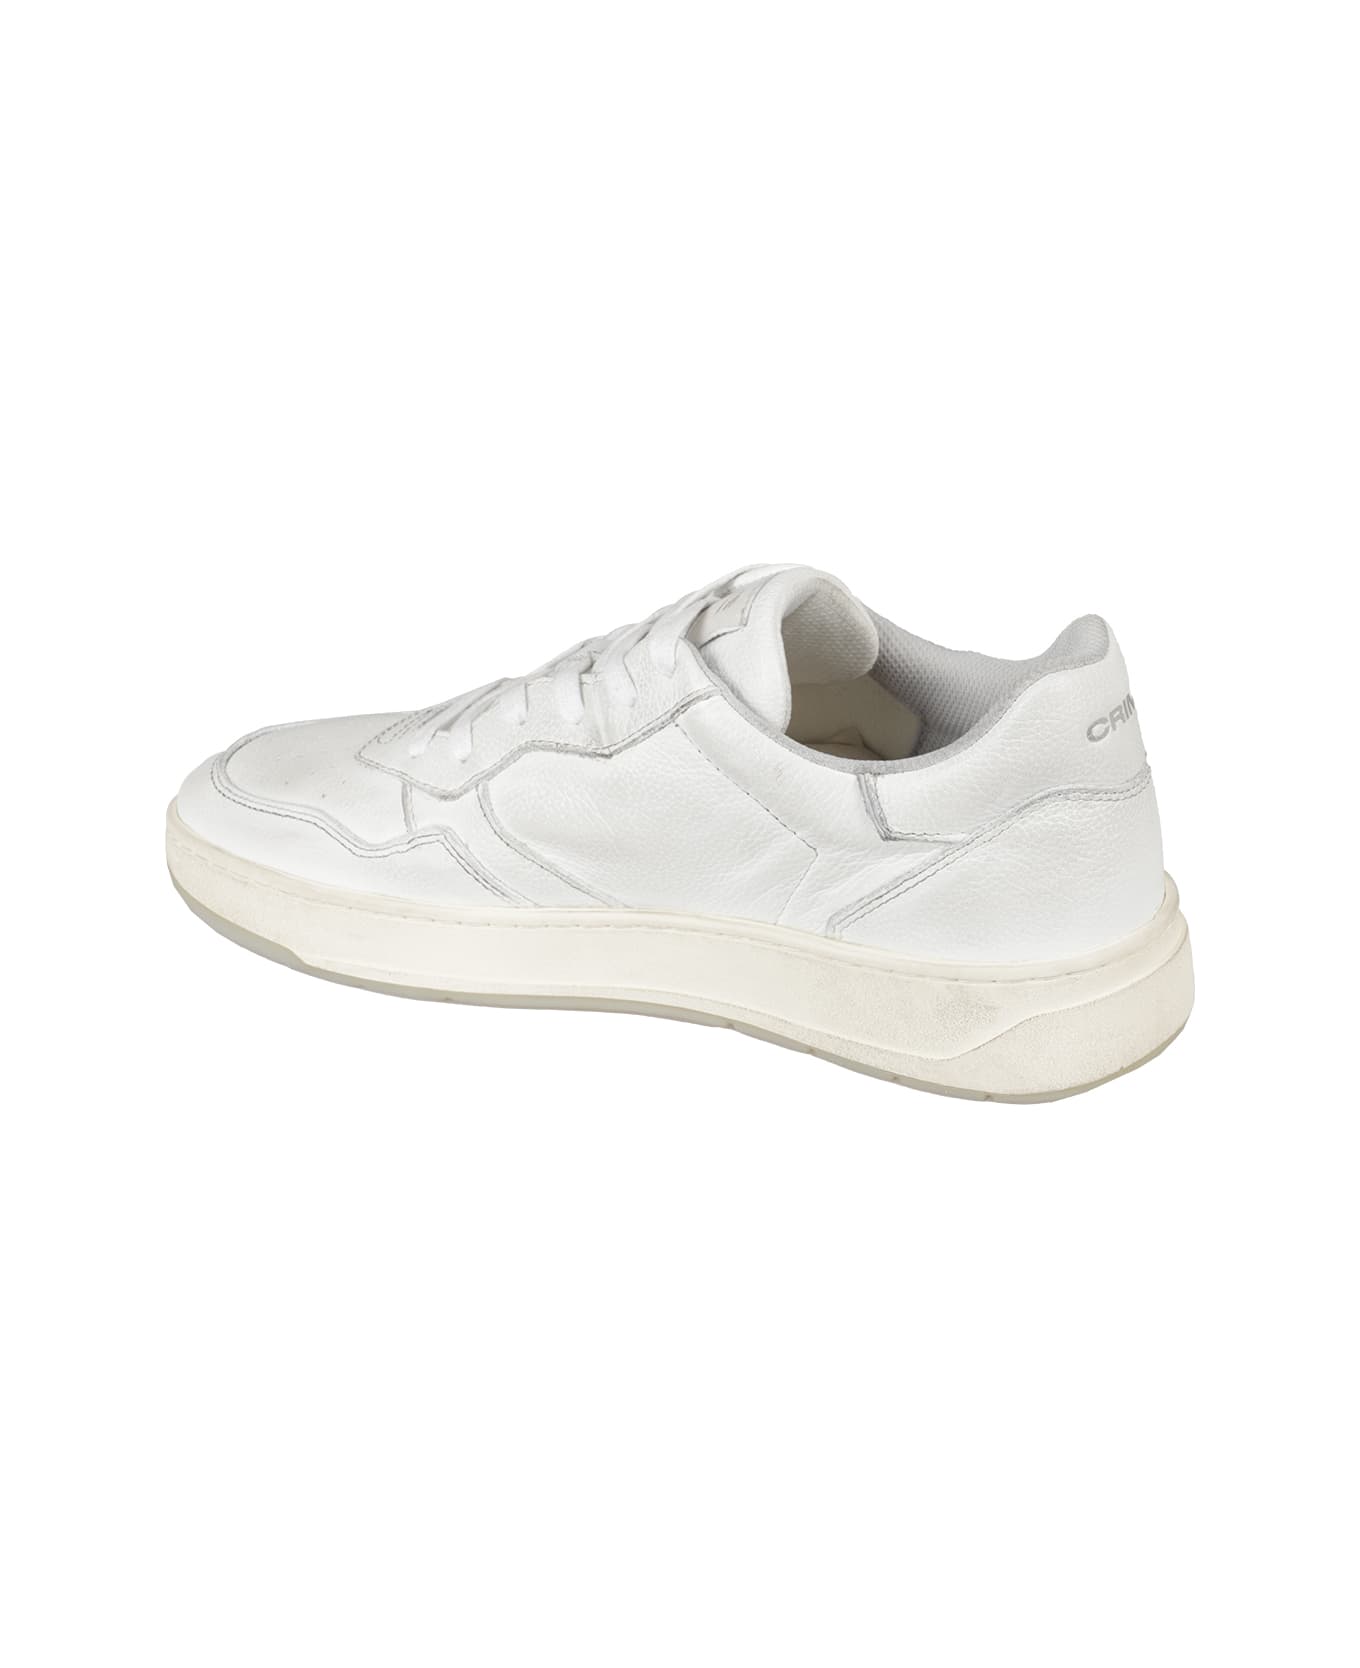 Crime london Sneakers - White